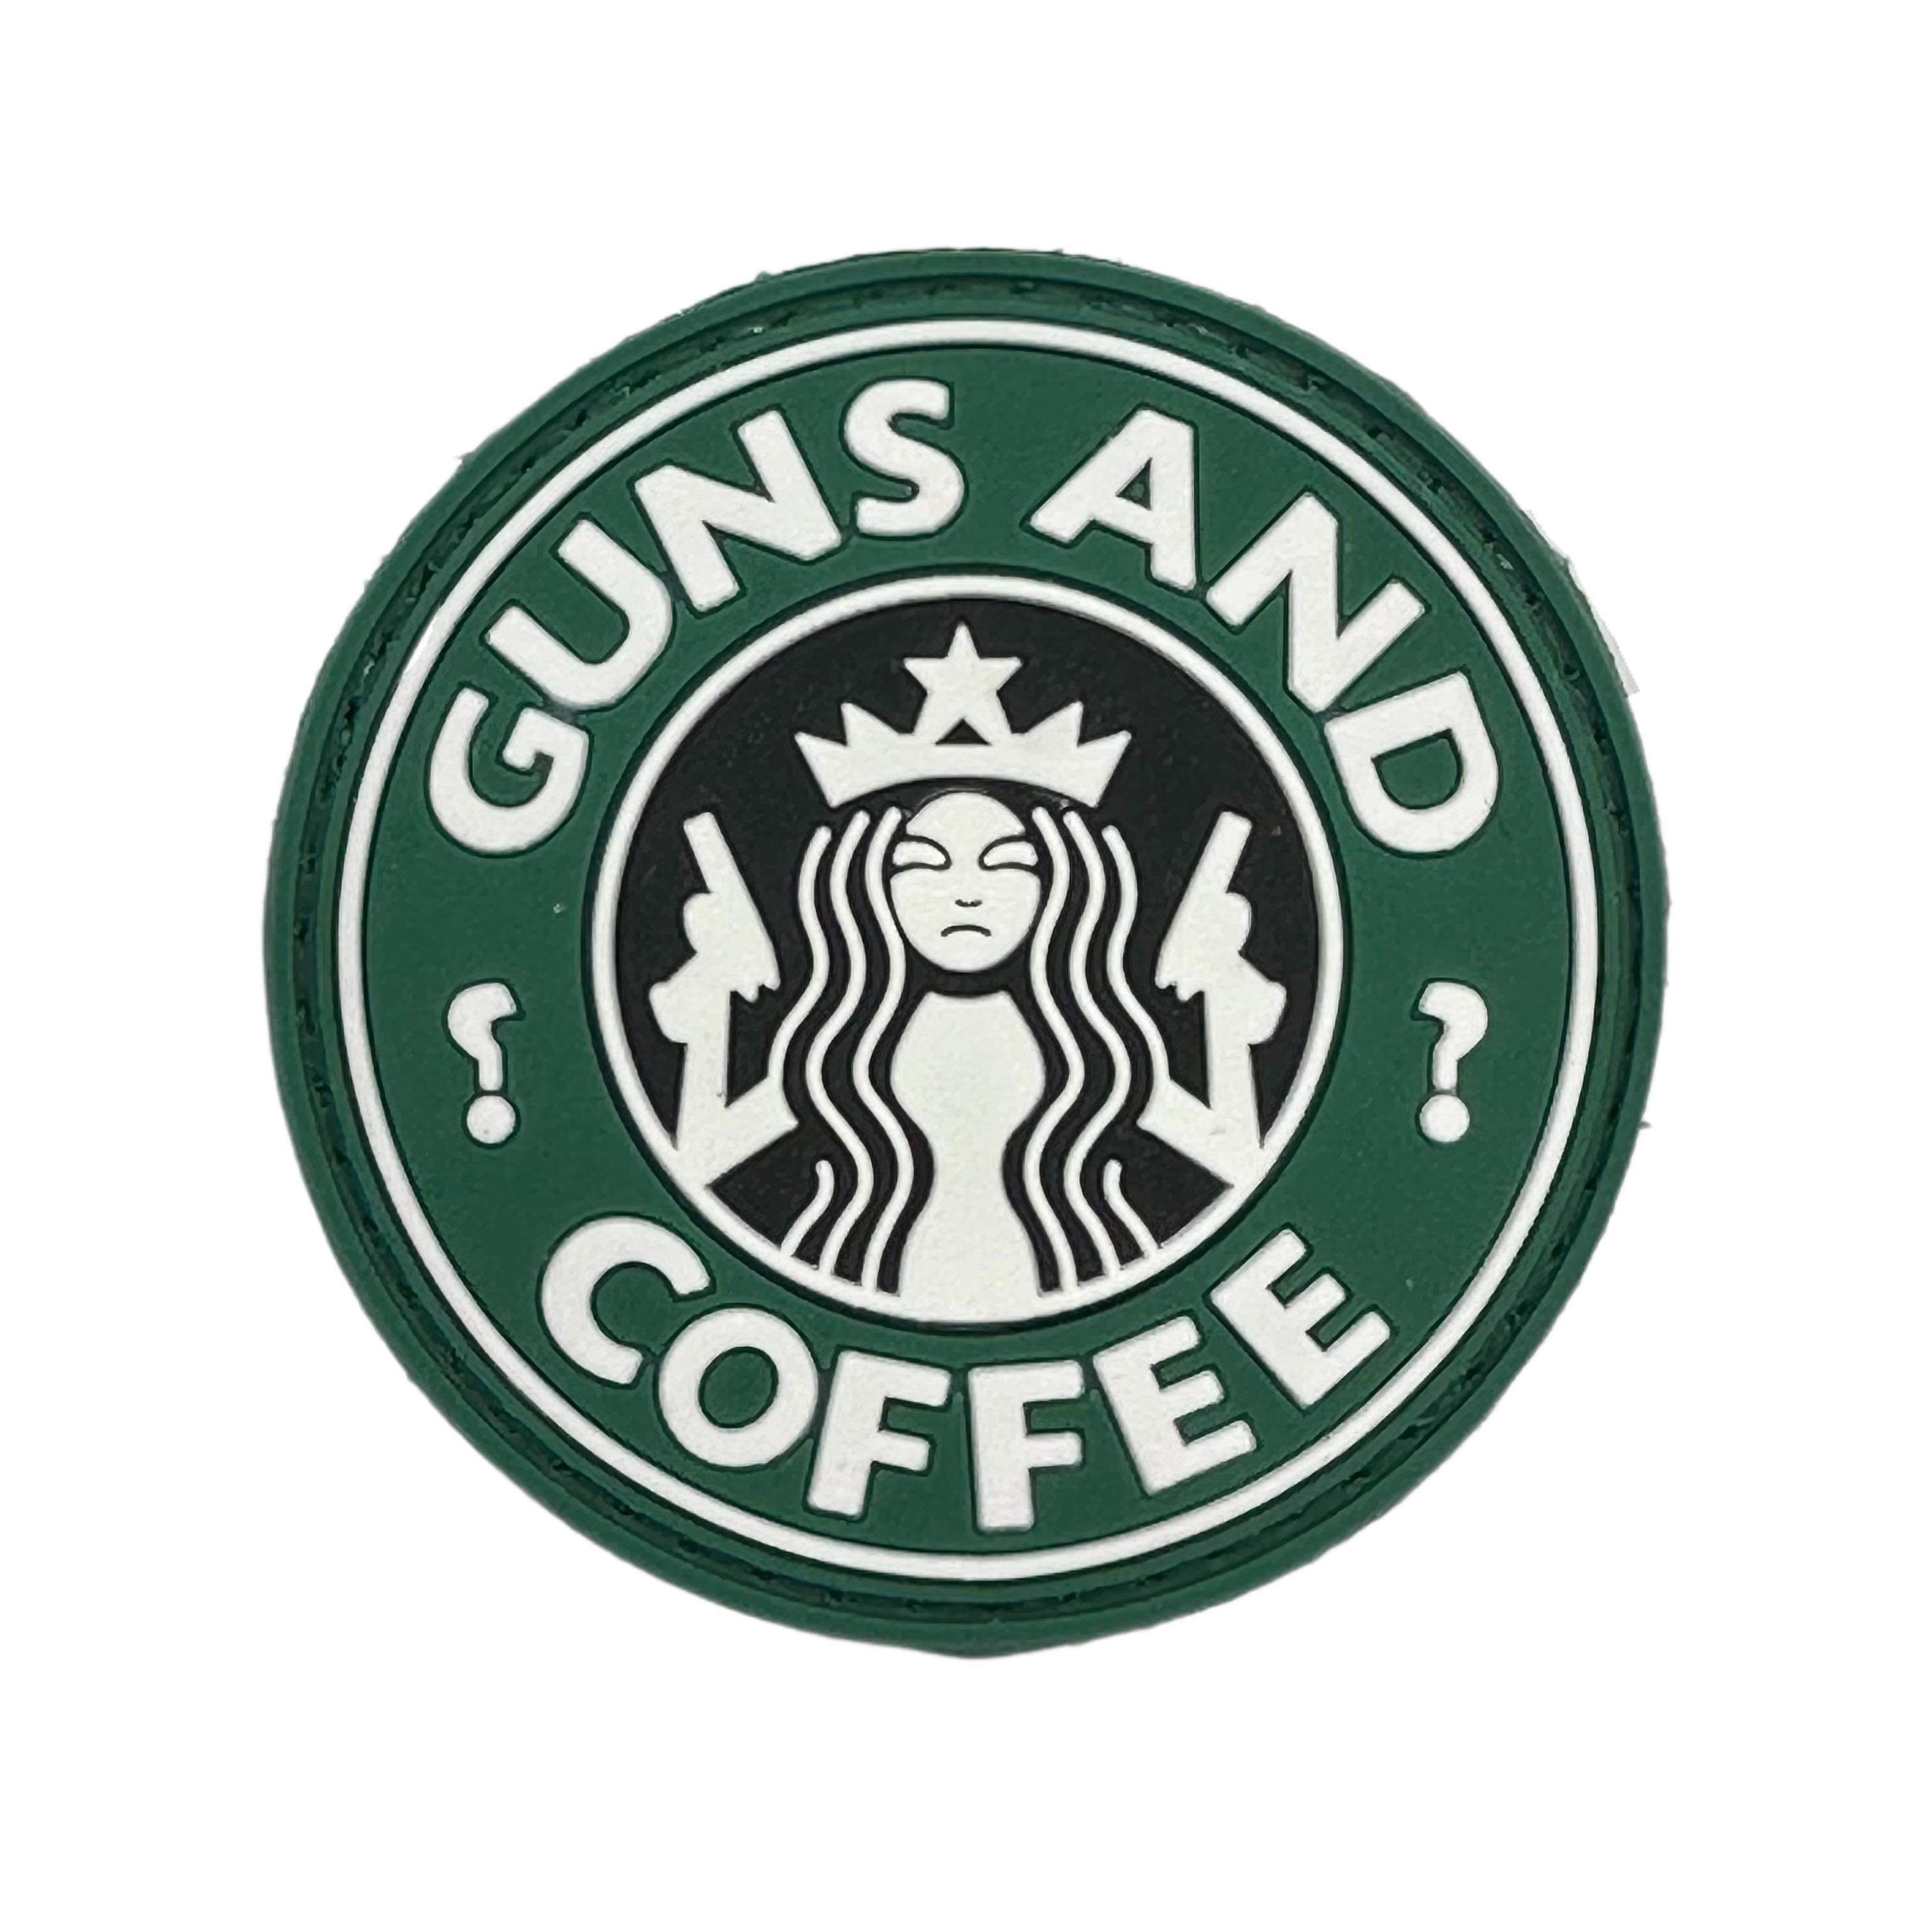 Rubber Patch - Guns & Coffee